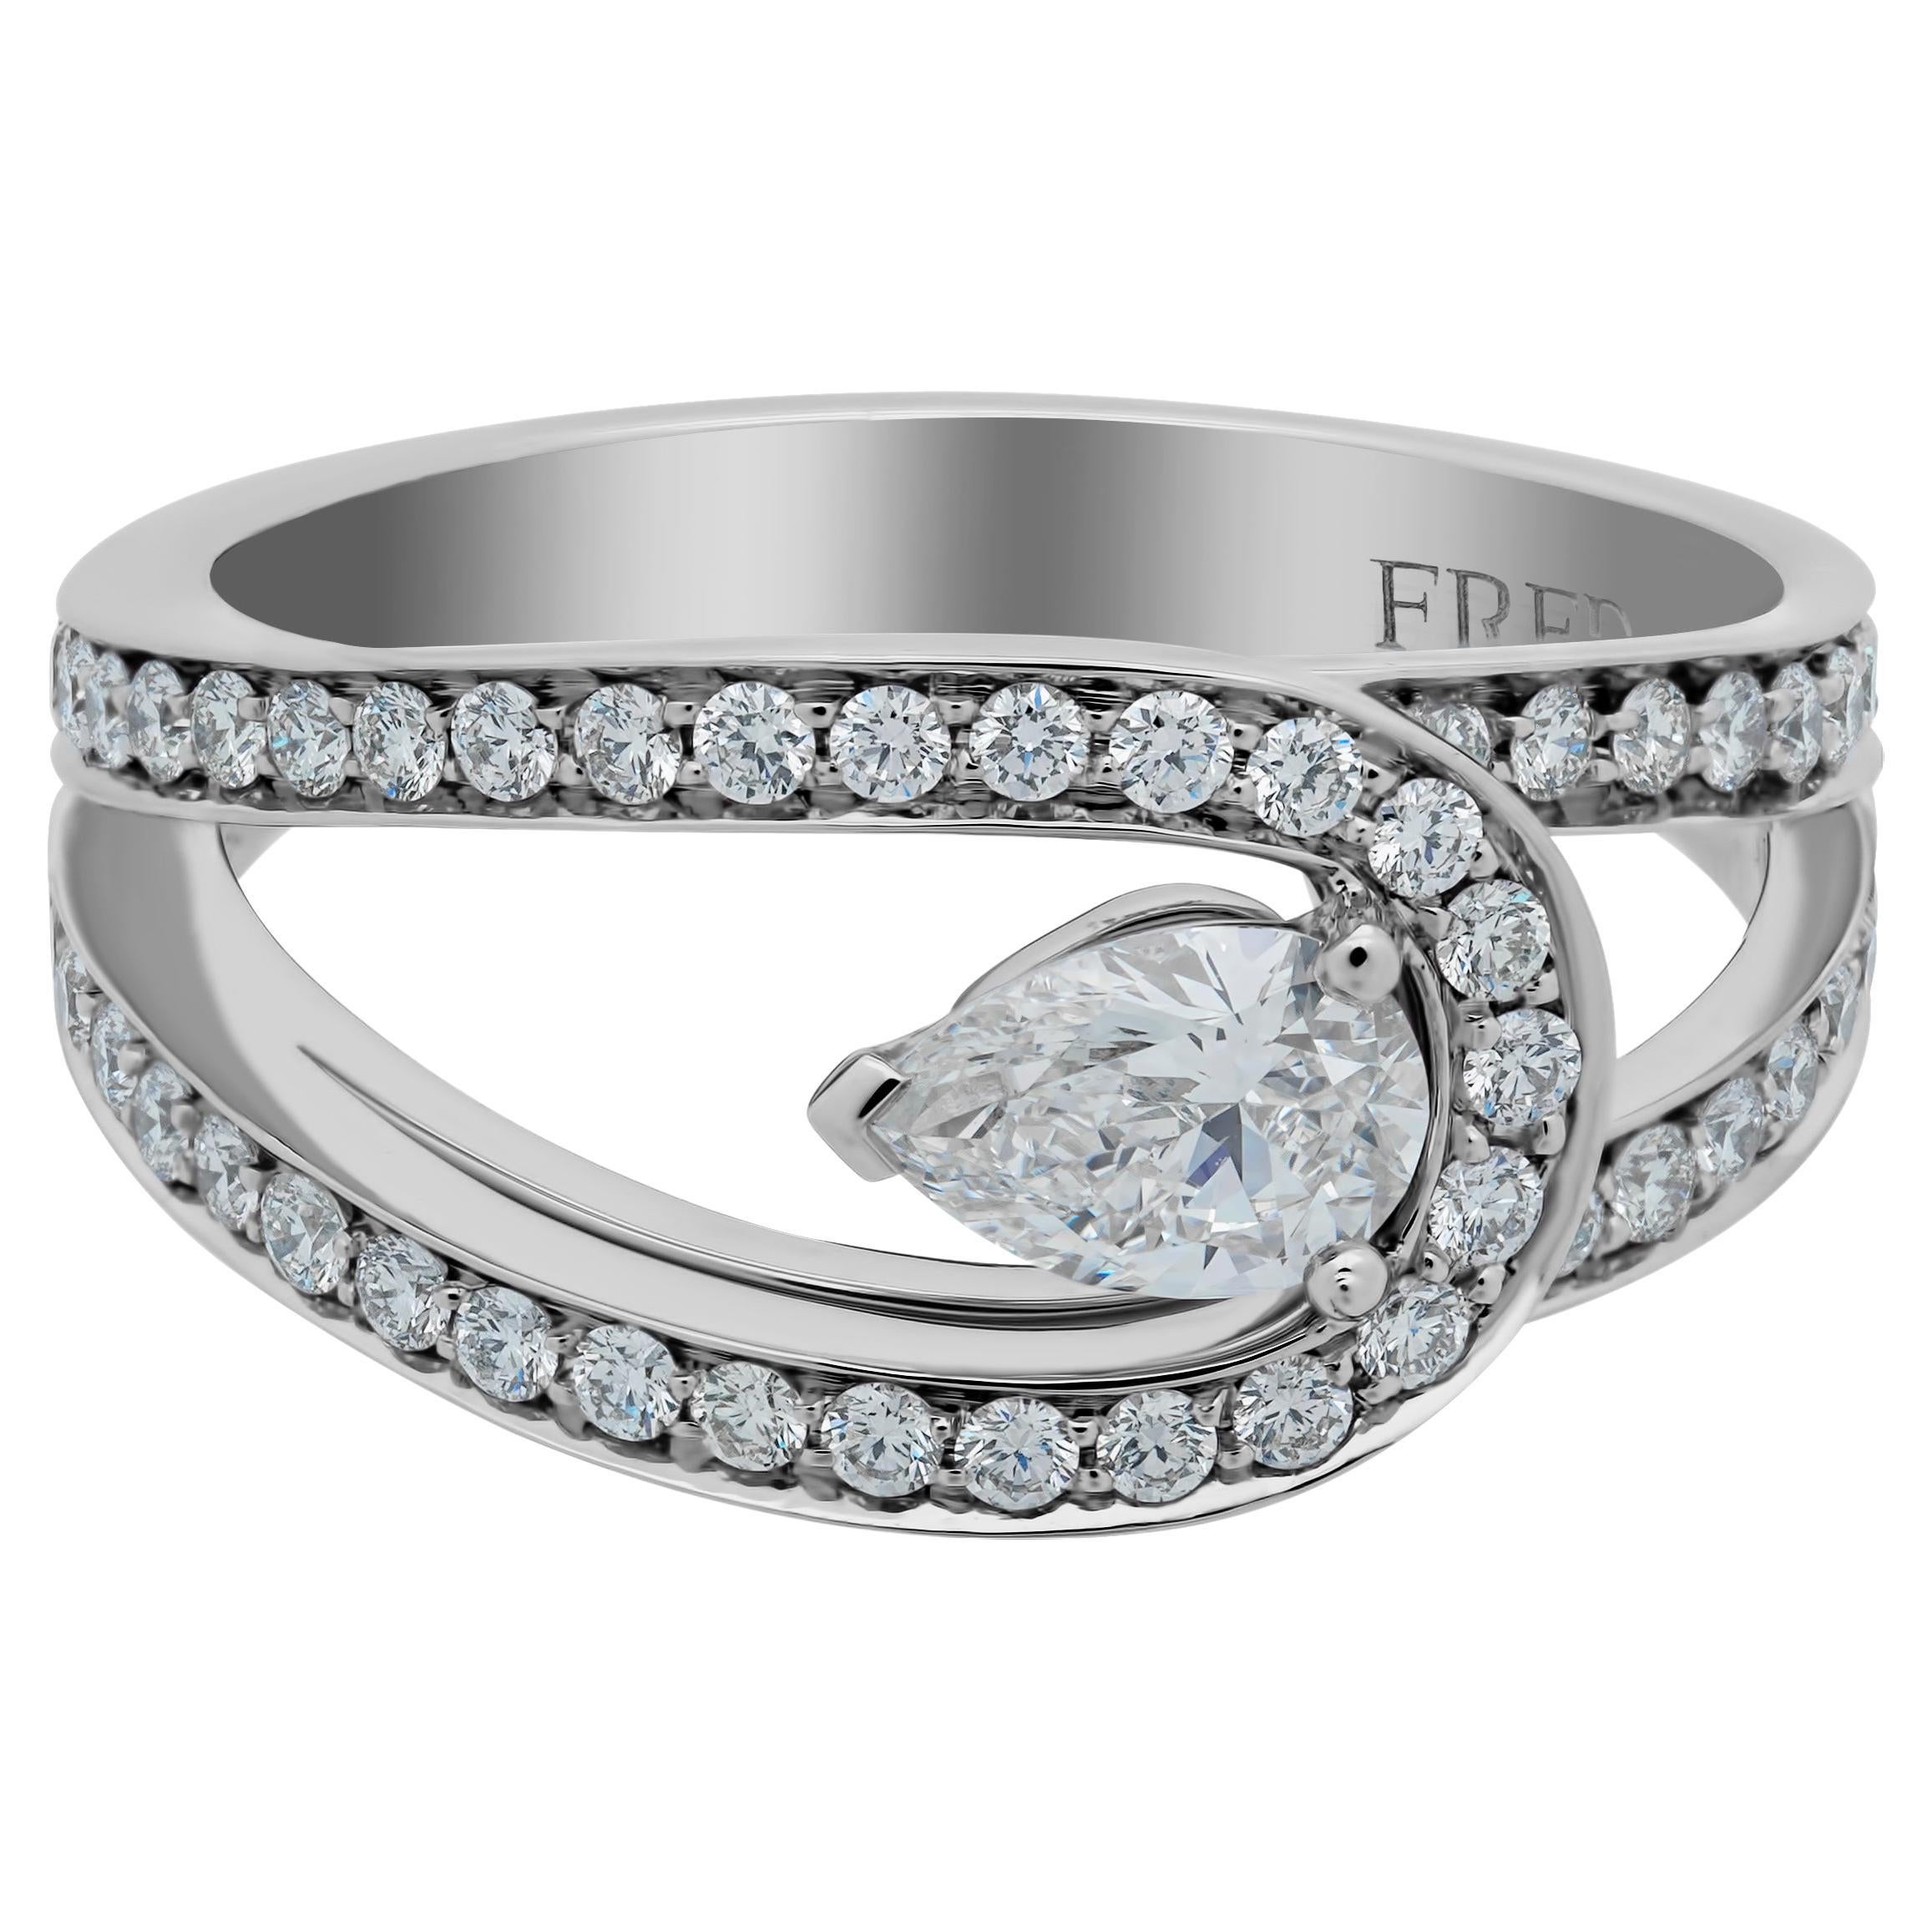 FRED Lovelight Platinum Pear Cut Center Diamond Engagement Ring sz 5.25 For Sale